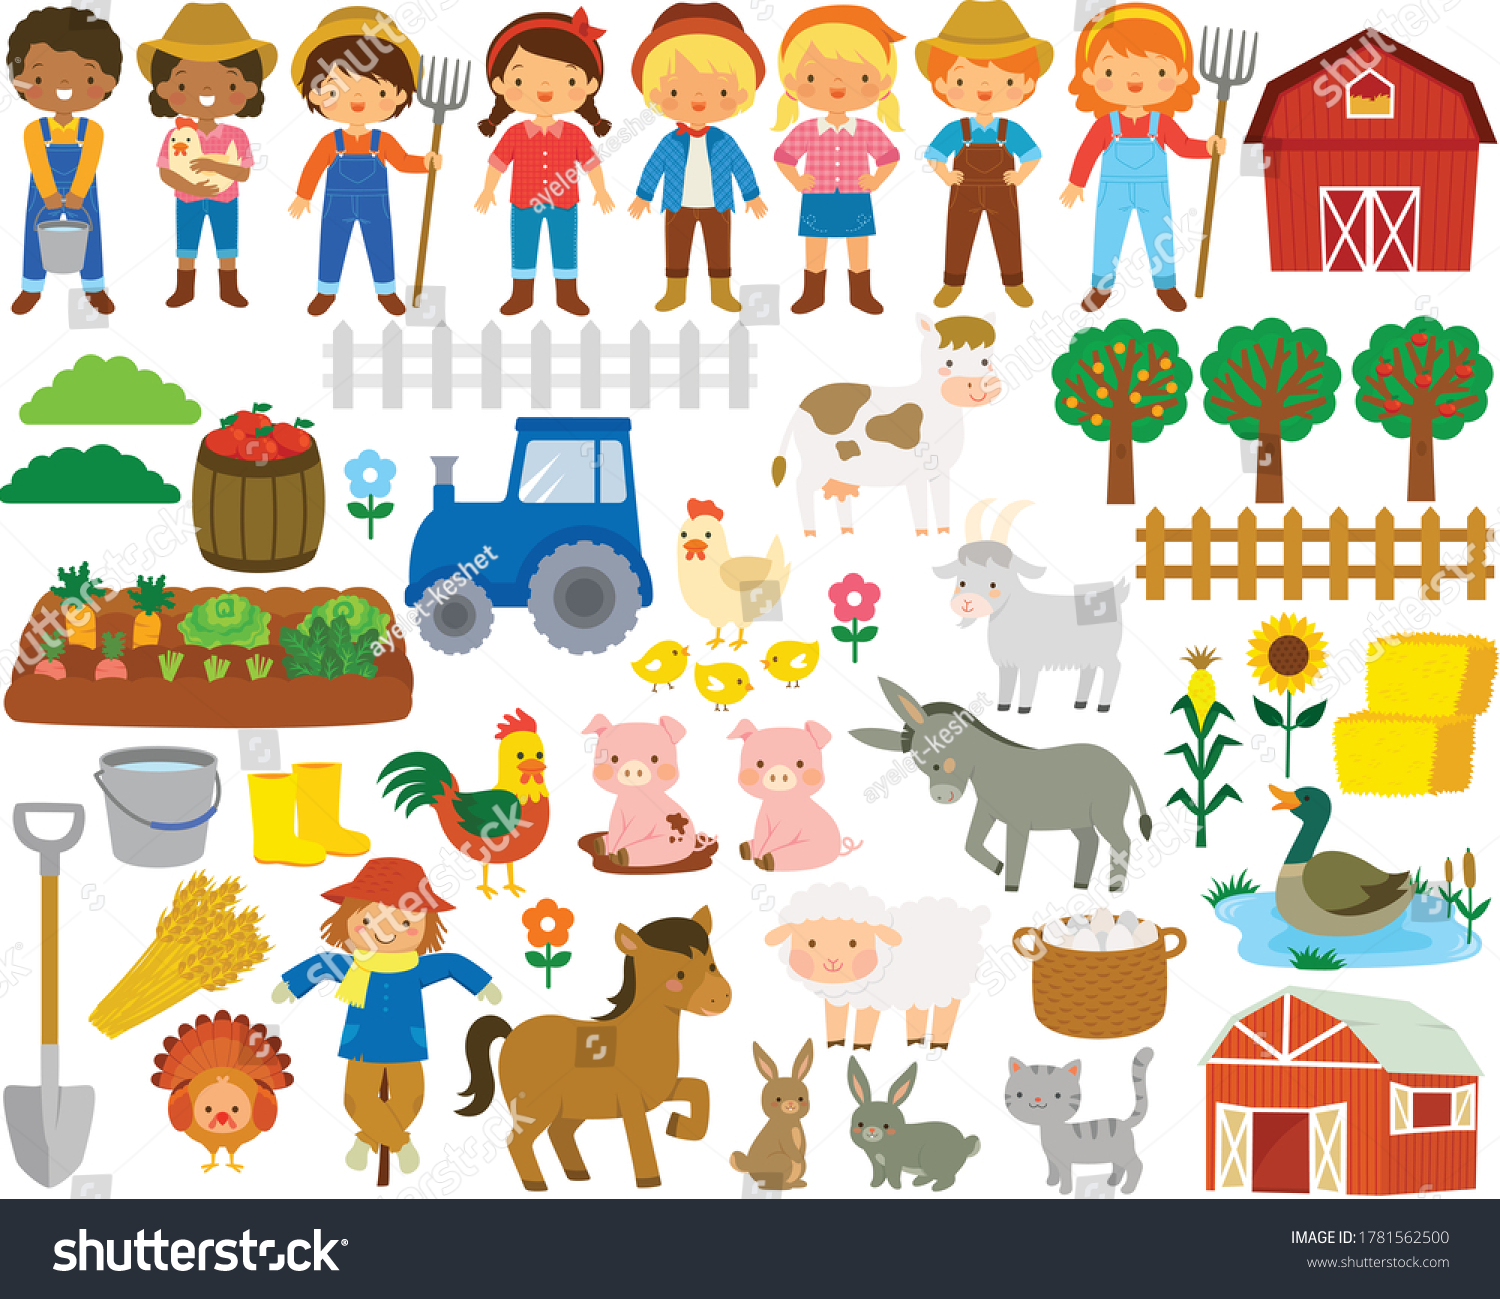 252,599 Cute farm designs Images, Stock Photos & Vectors | Shutterstock